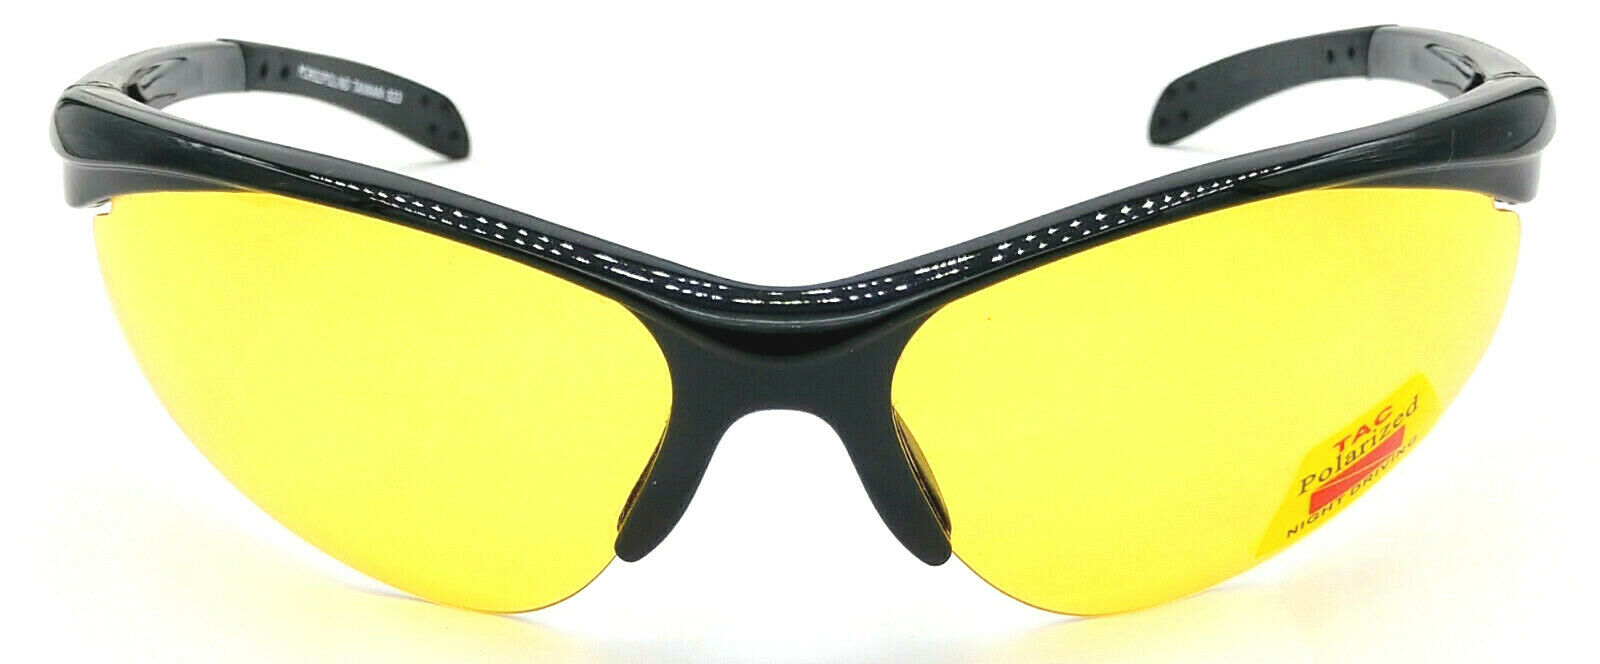 GLARE-X Night Driving Optics Yellow Polarized Lenses Reduce Glare Semi-Rimless